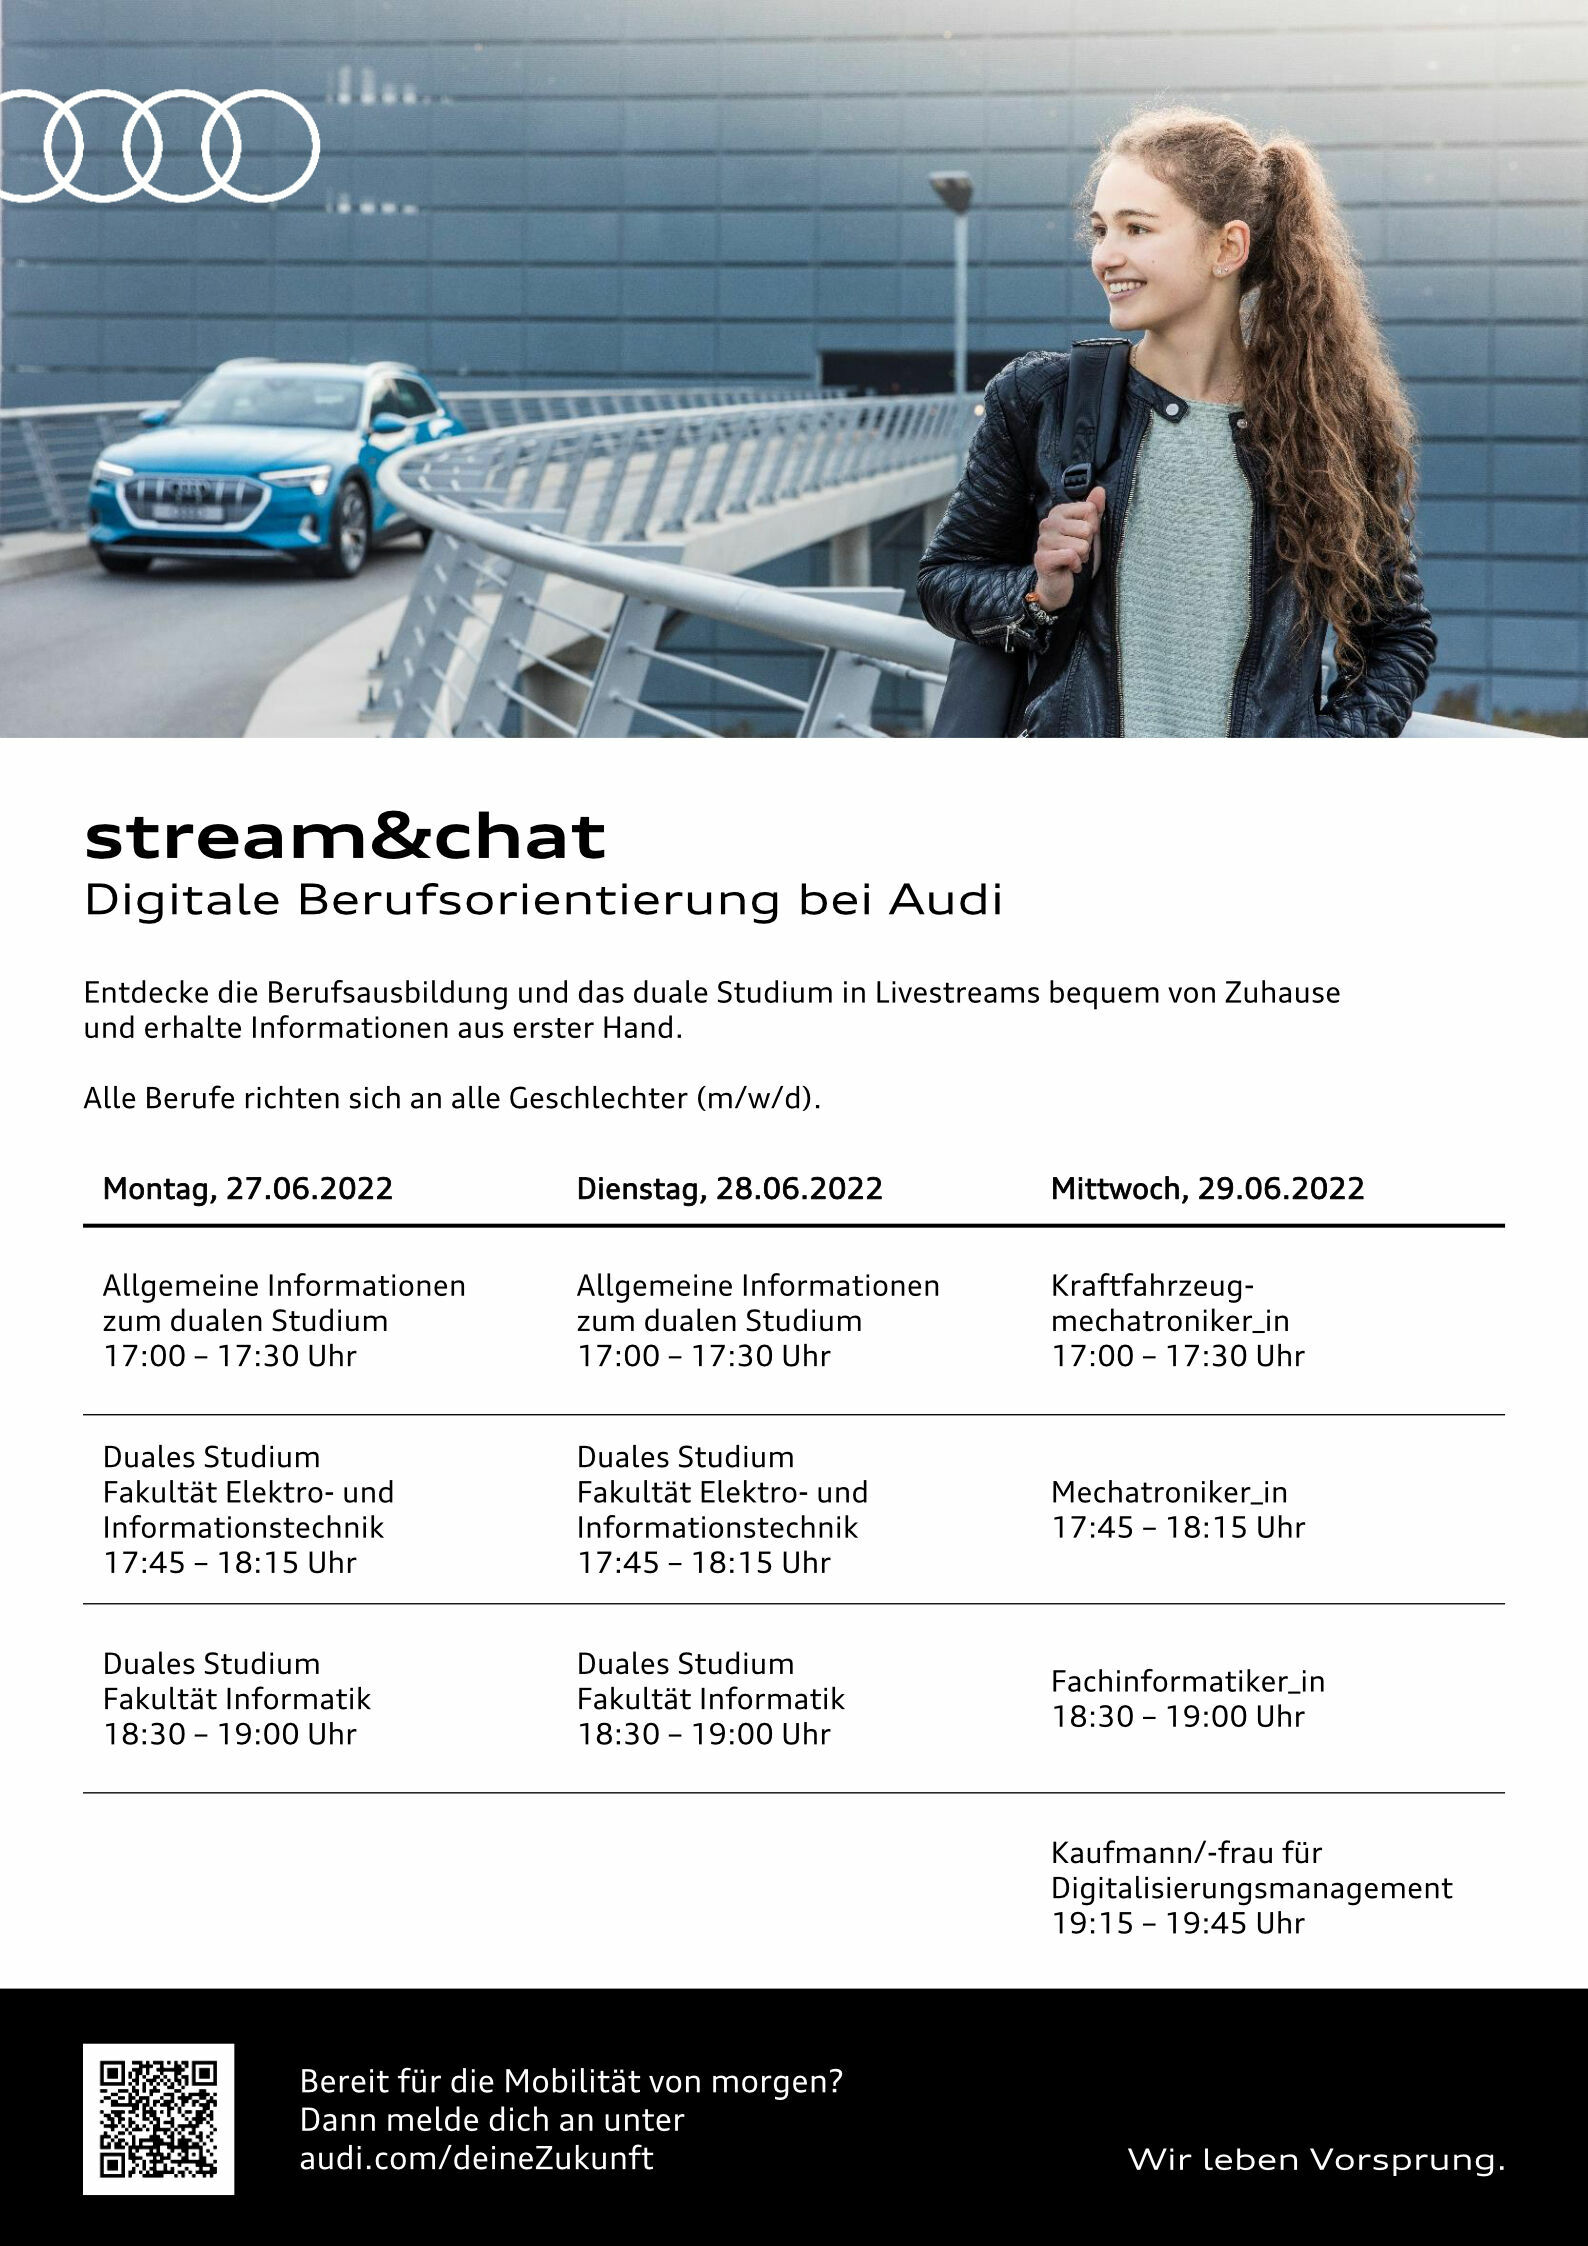 Dates for digital career orientation at Audi Ingolstadt